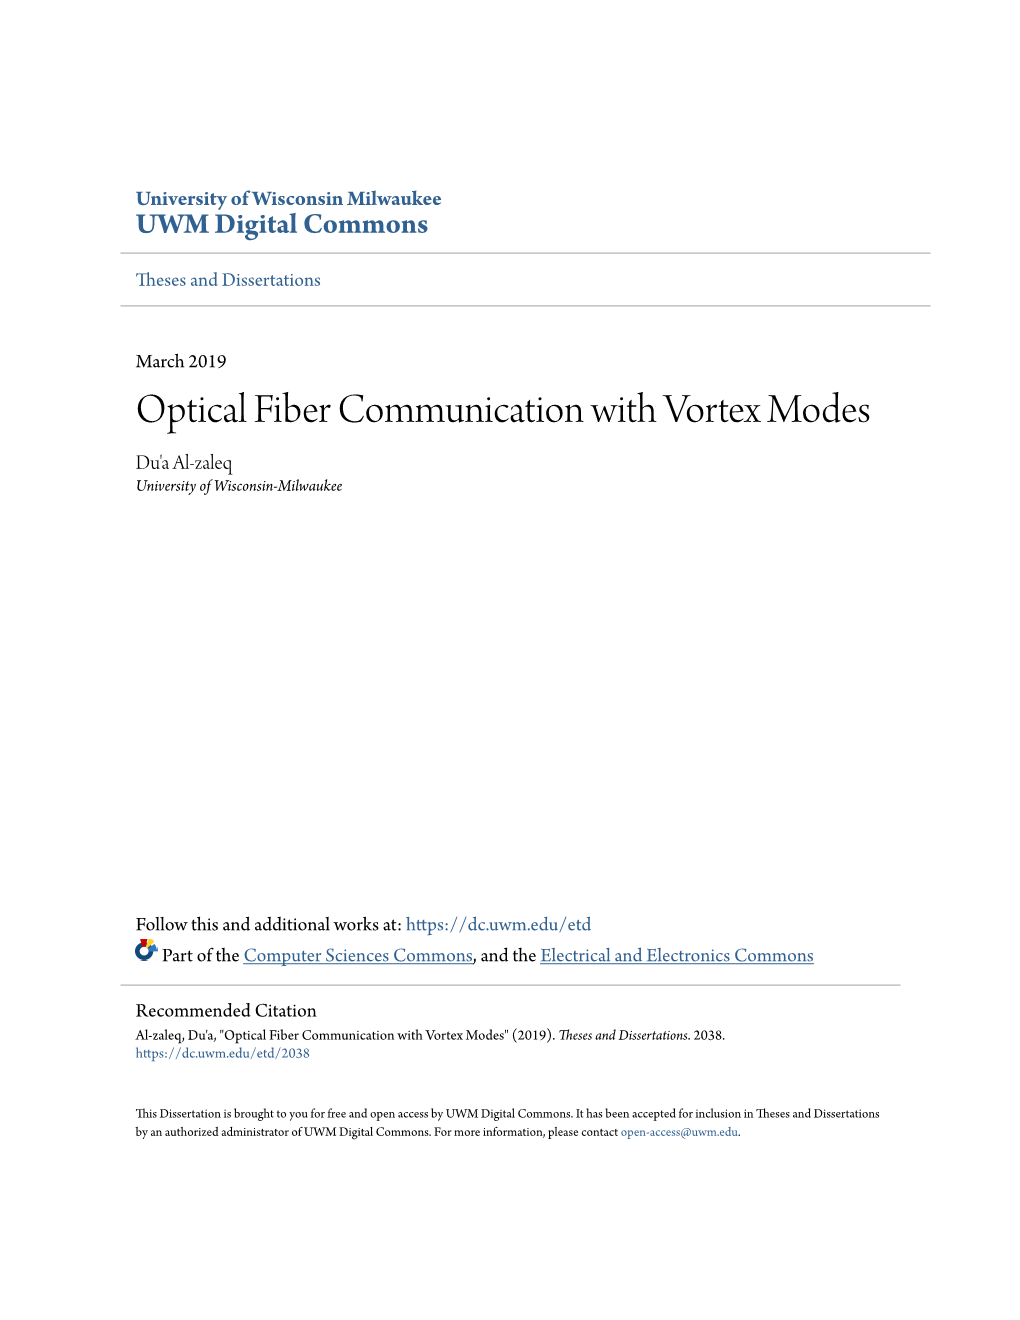 Optical Fiber Communication with Vortex Modes Du'a Al-Zaleq University of Wisconsin-Milwaukee